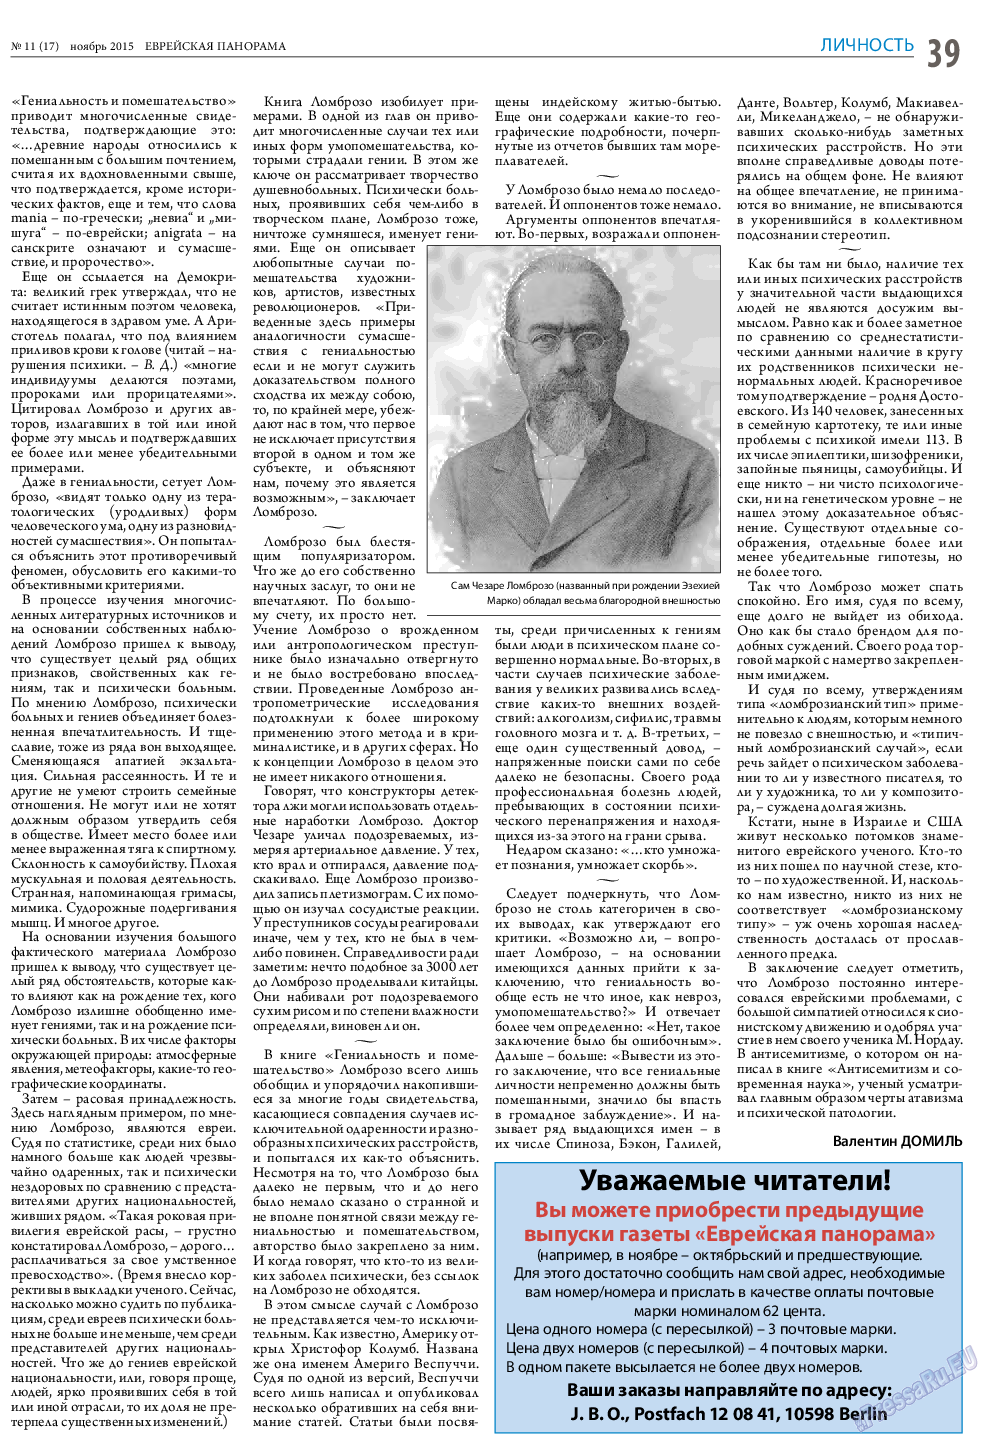 Еврейская панорама, газета. 2015 №11 стр.39